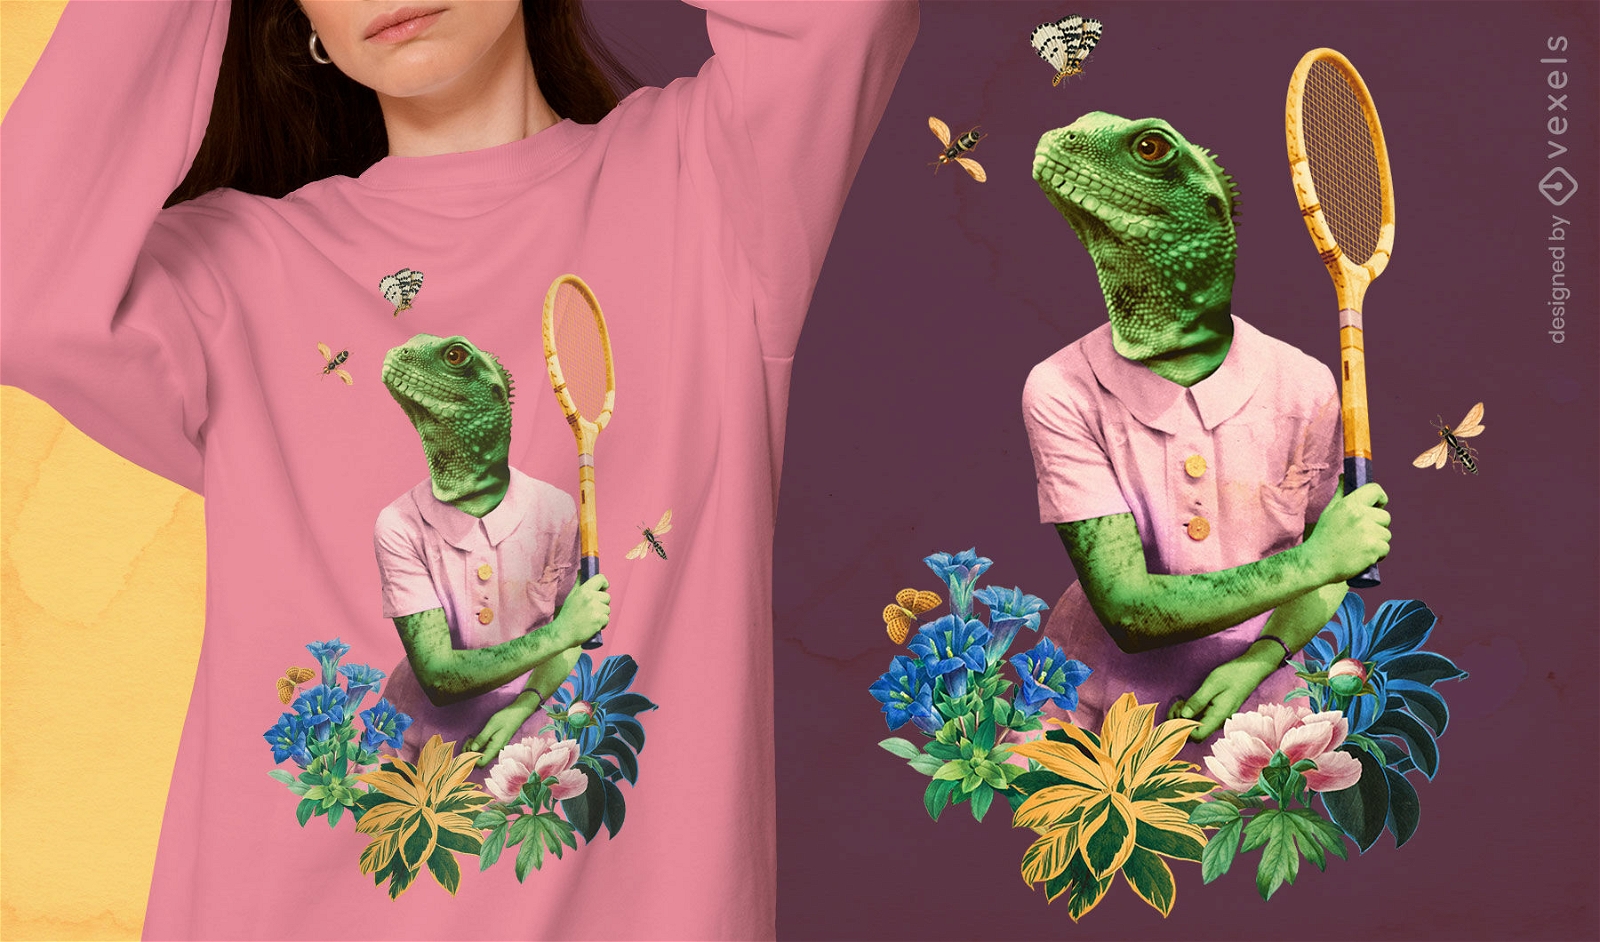 Fancy lizard animal playing tennis t-shirt psd